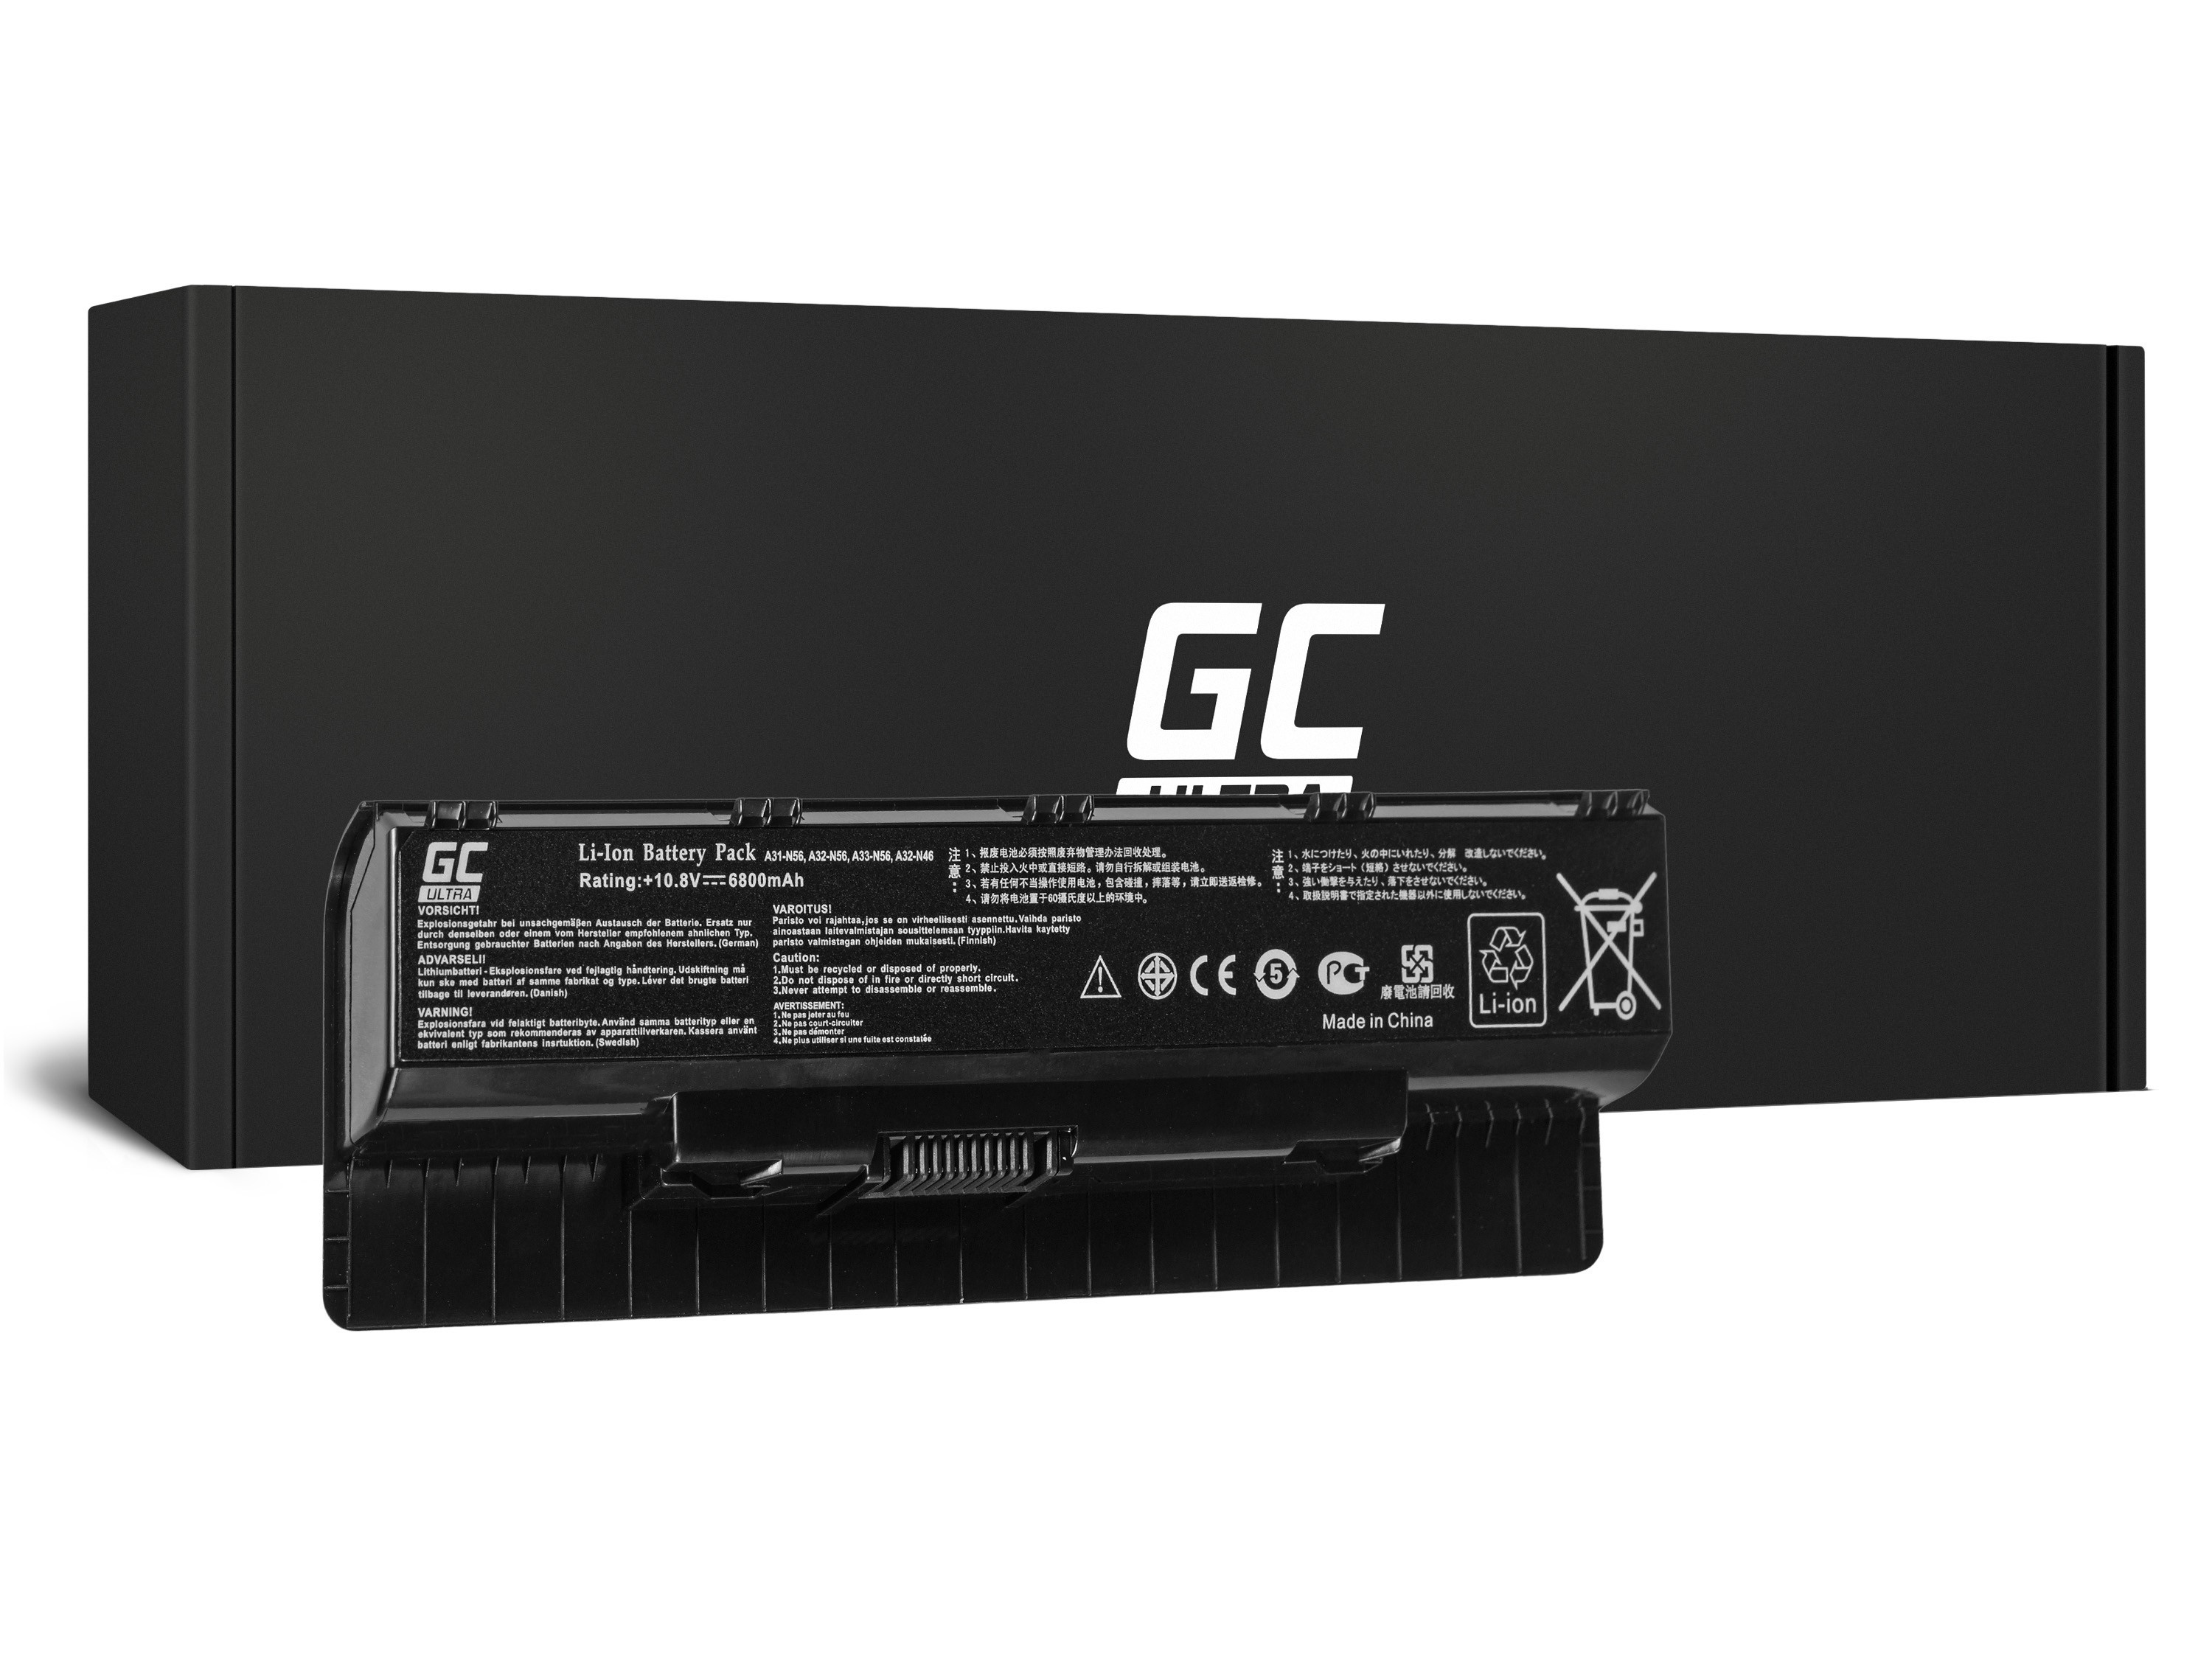 GREEN CELL ULTRA Laptop Battery for Asus A32-N56 N46 N46V N56 N76 - 11.1V - 6800mAh